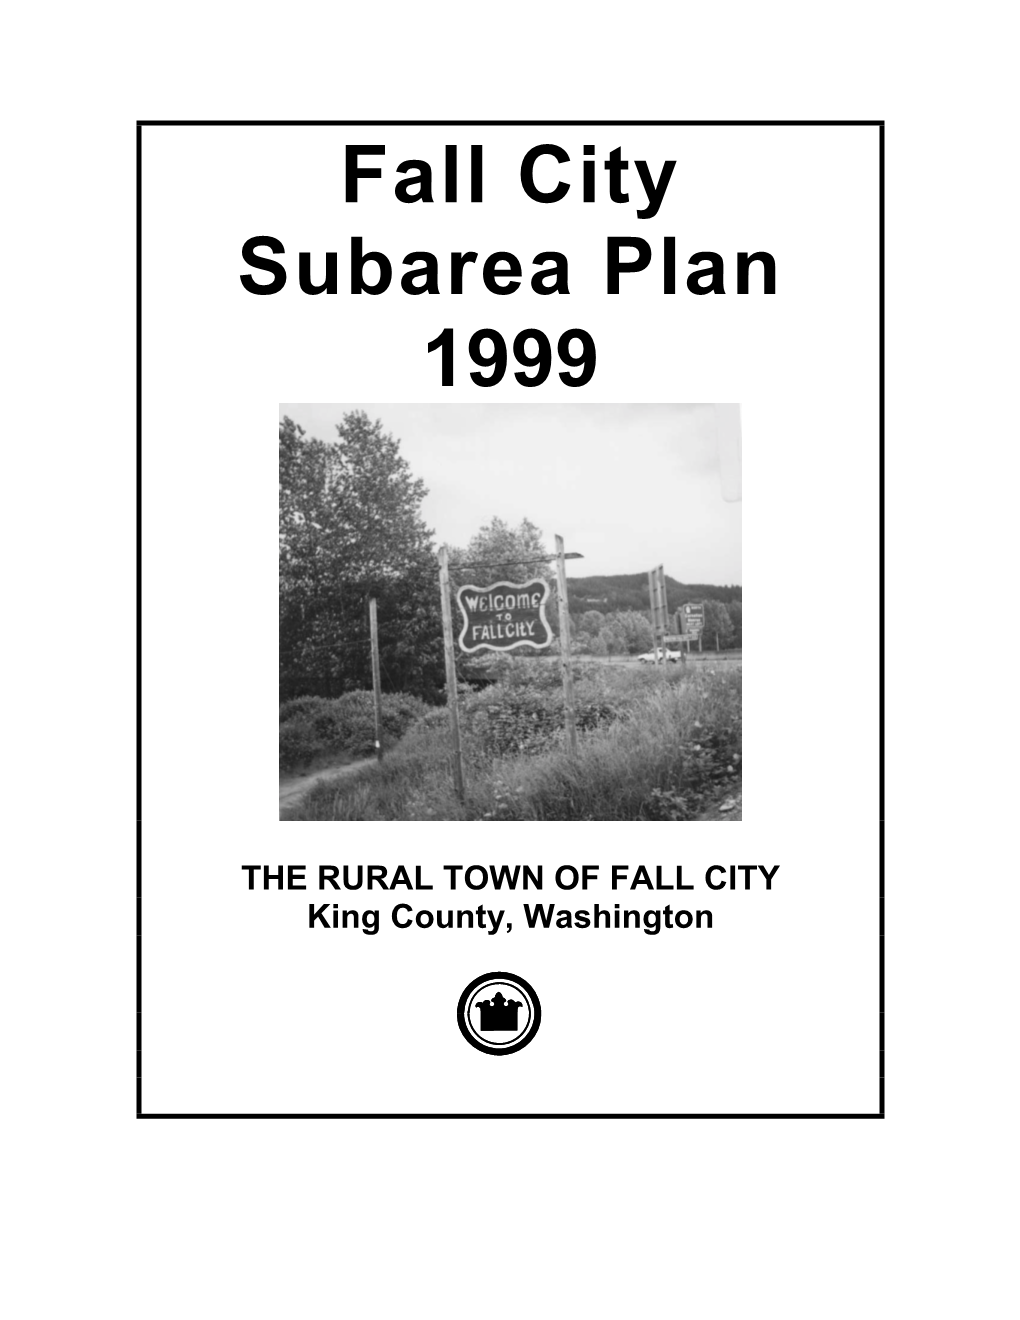 1999 Fall City Subarea Plan